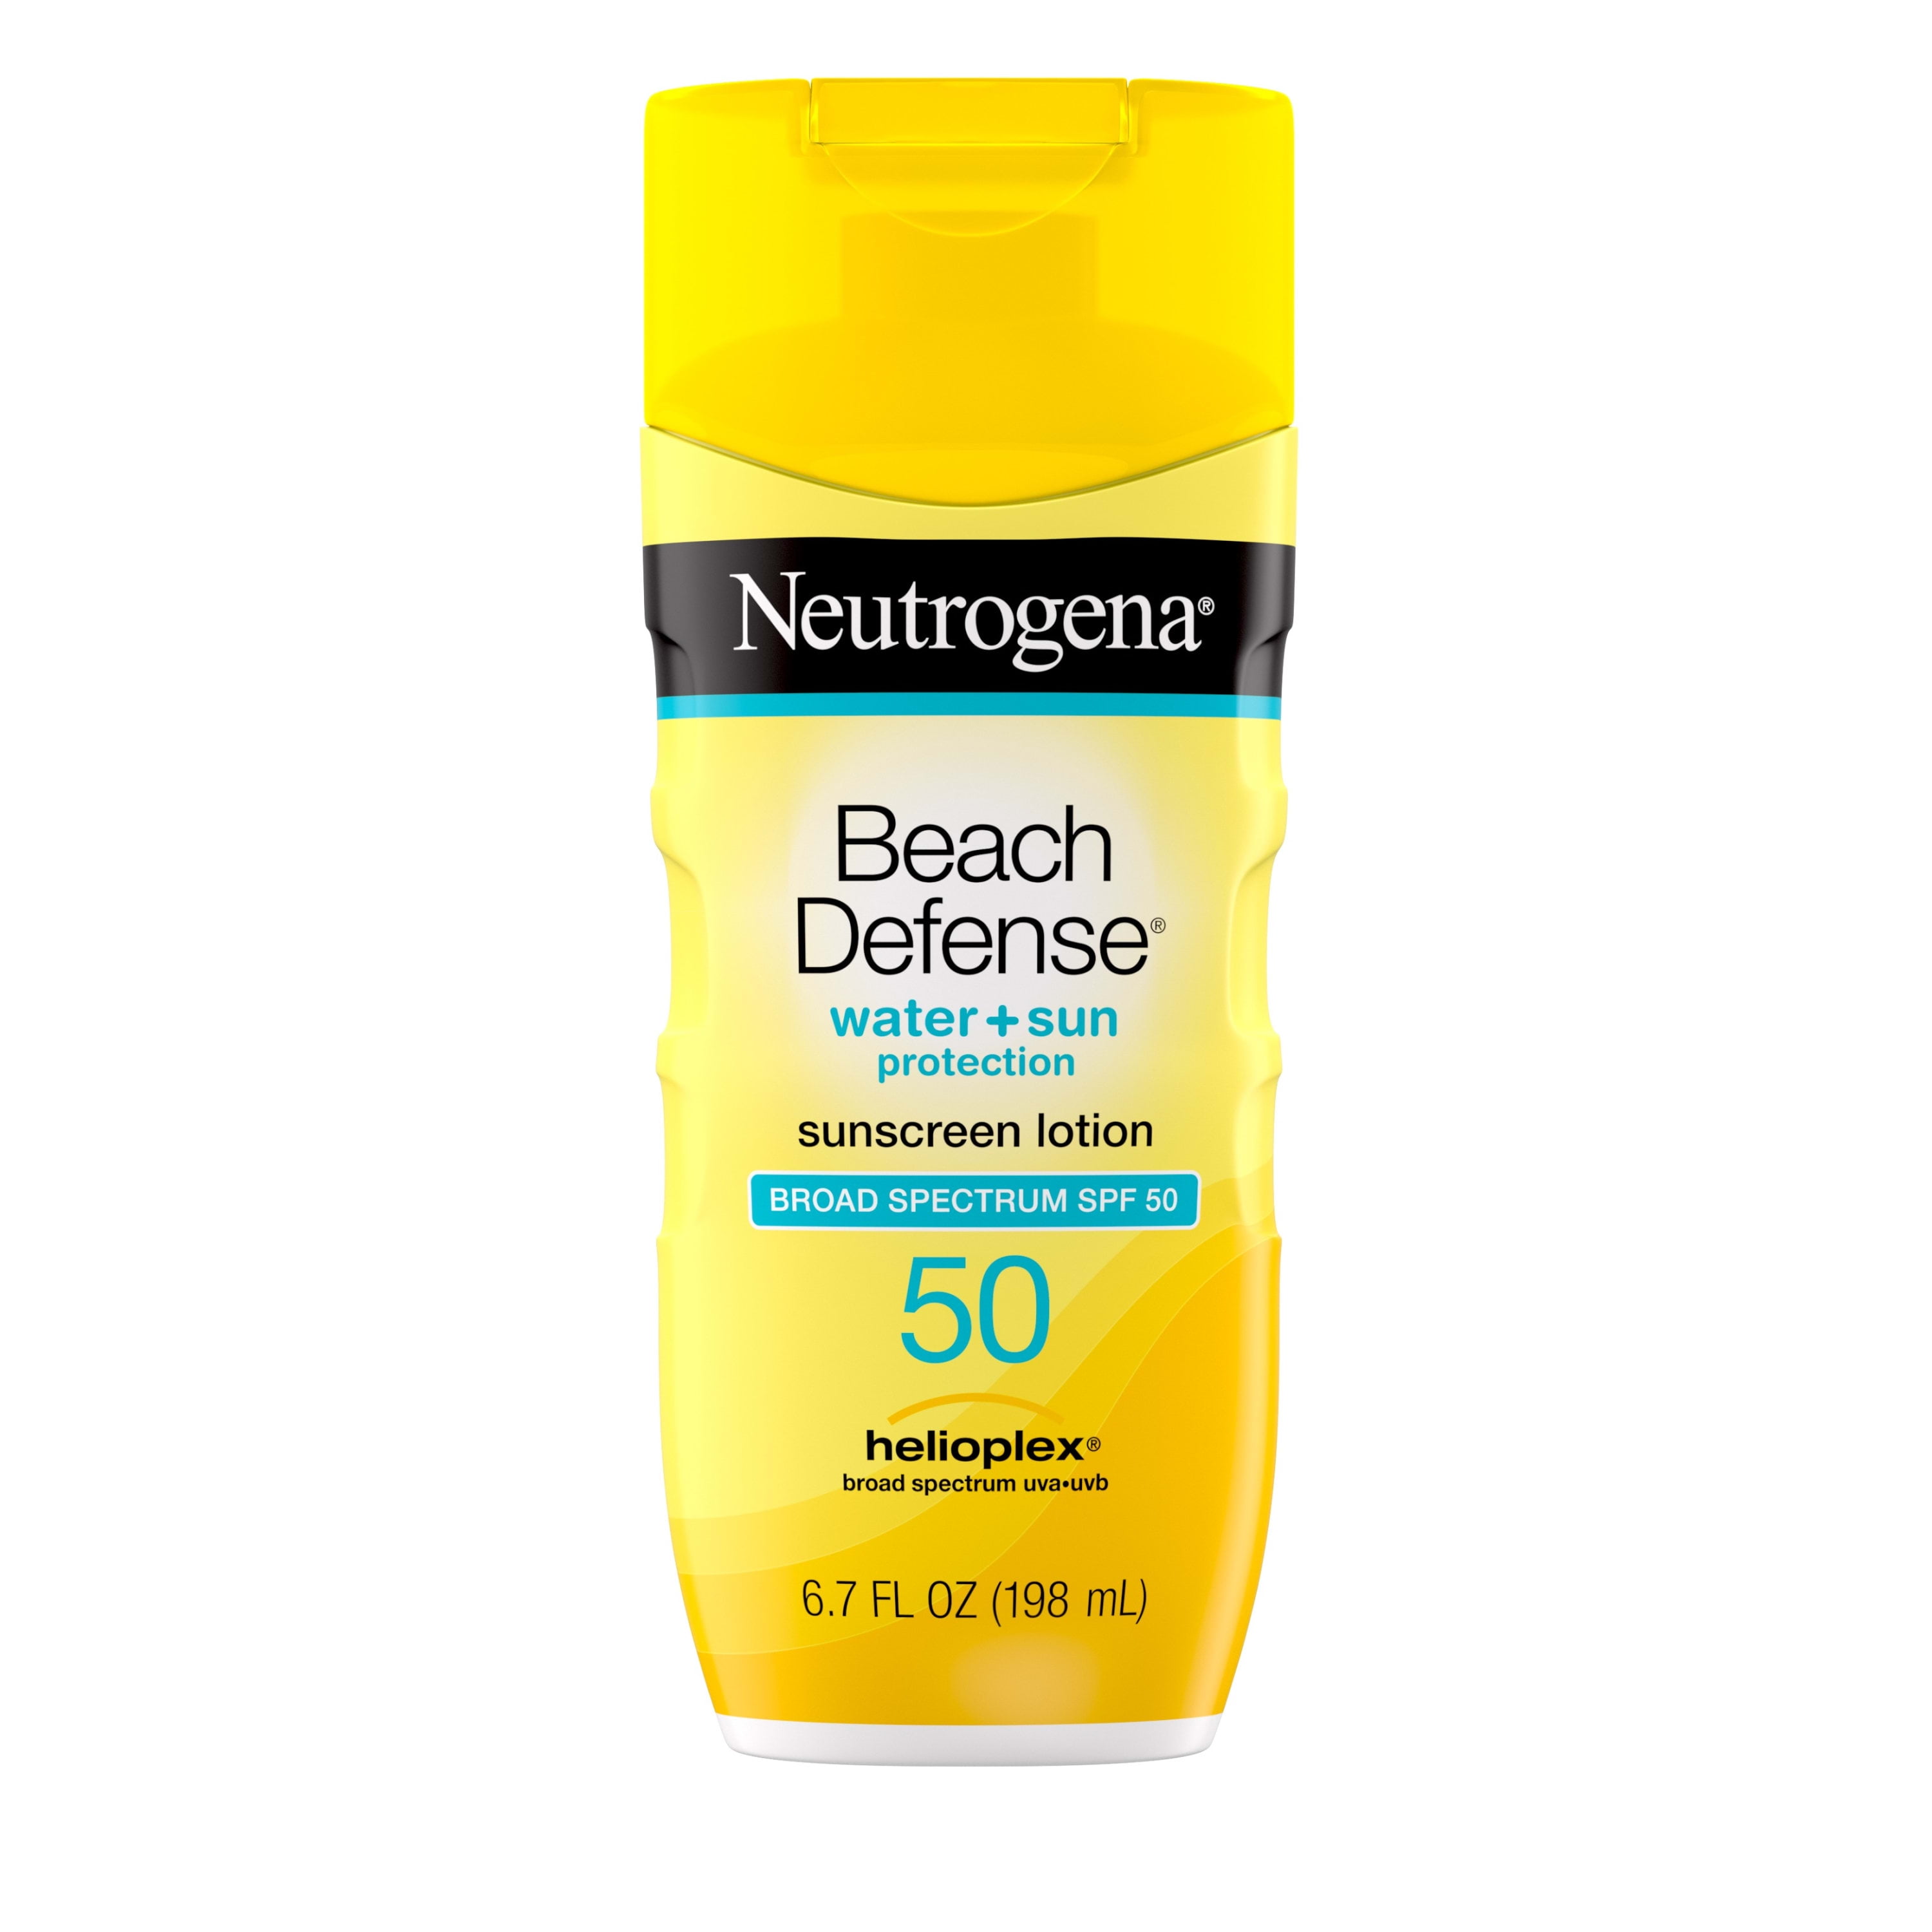 Neutrogena Beach Defense Sunscreen Lotion with SPF 50, 6.7 fl. oz